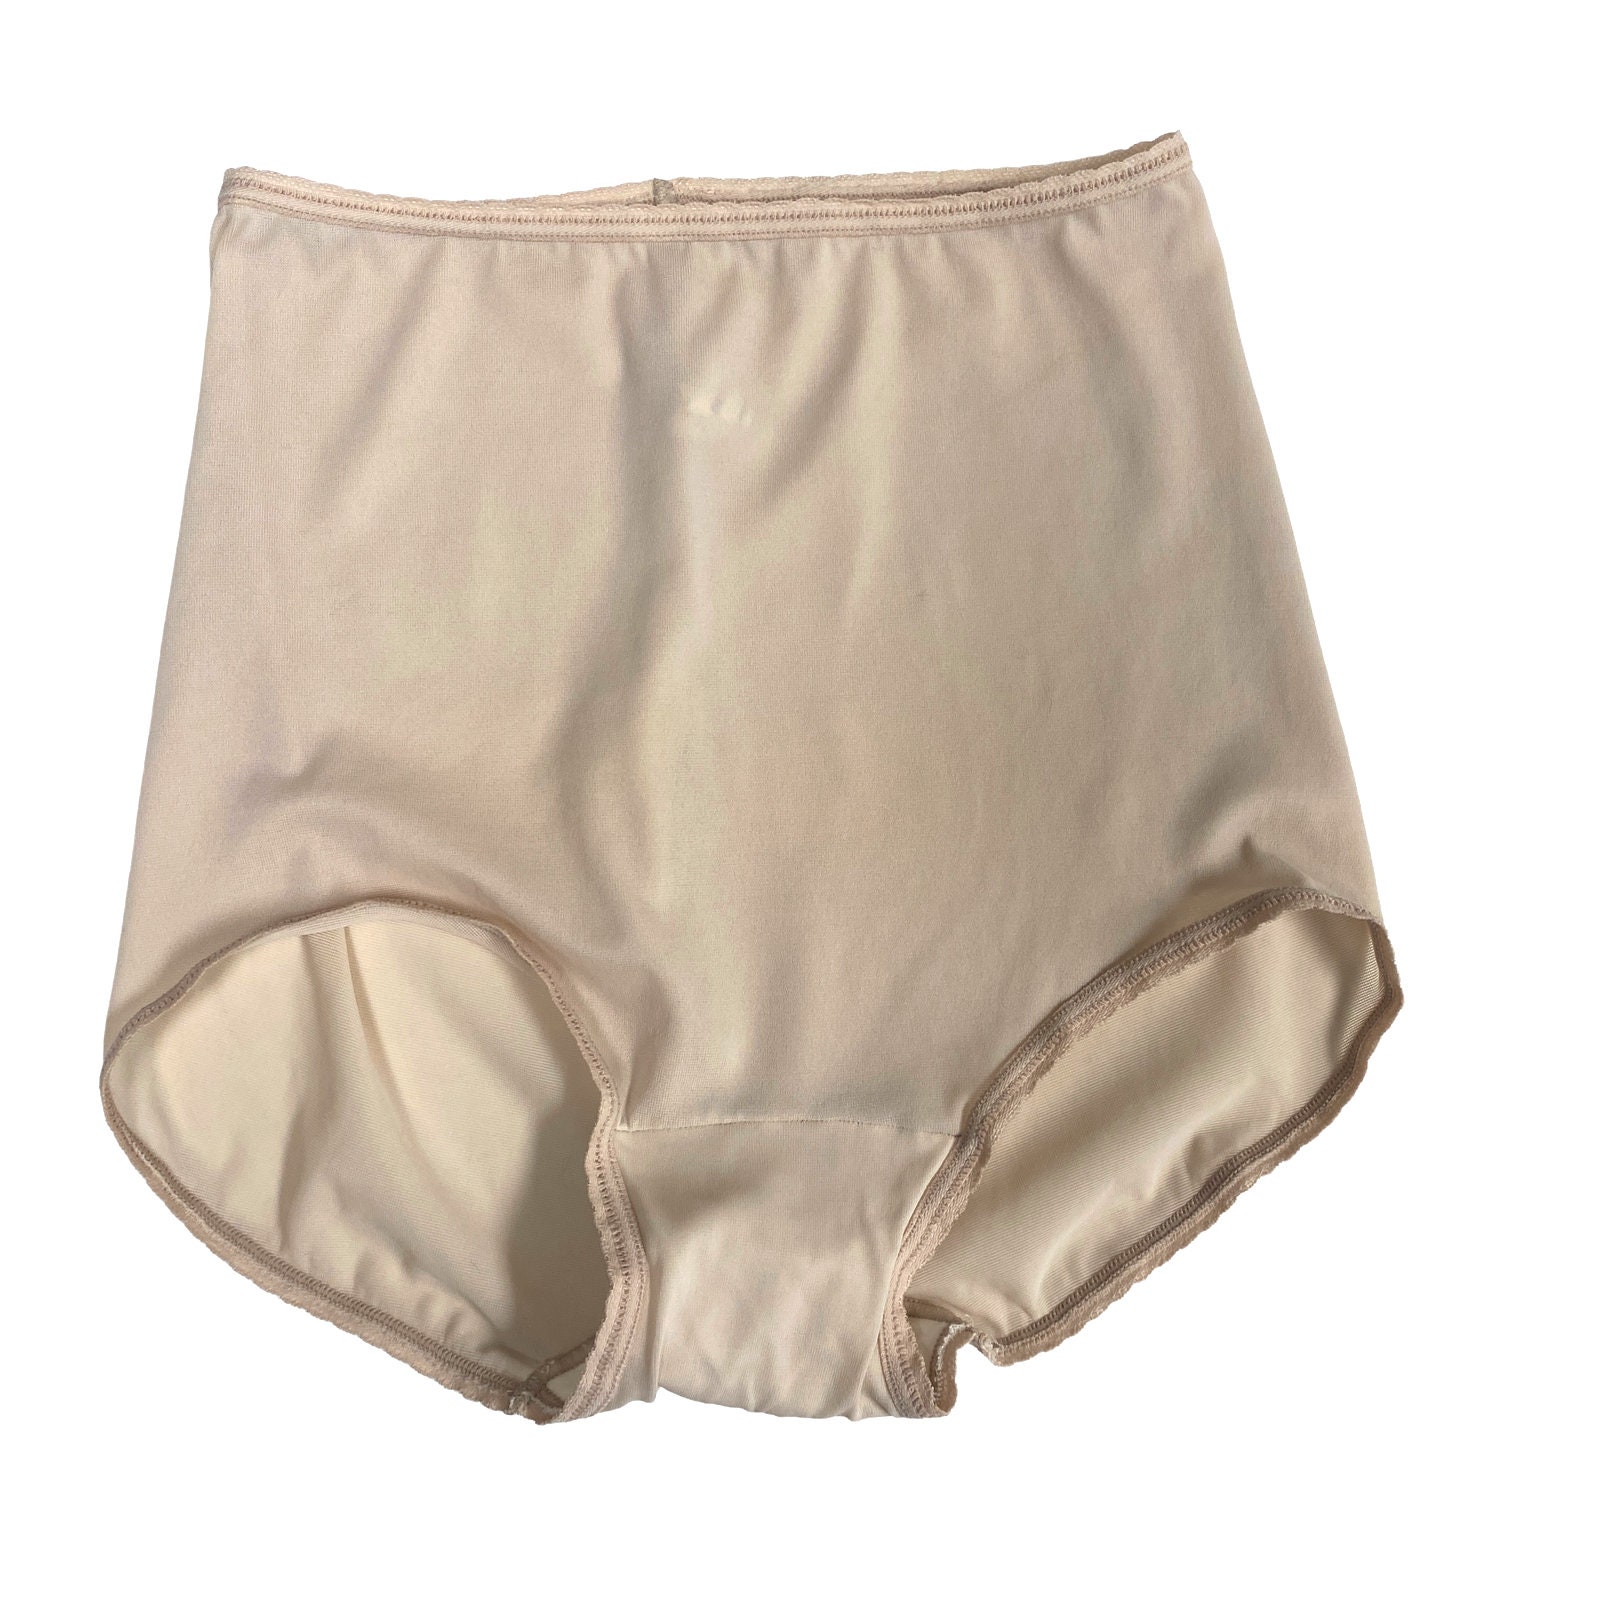 Vintage 70's Bali Wondershape Panties Size Small 